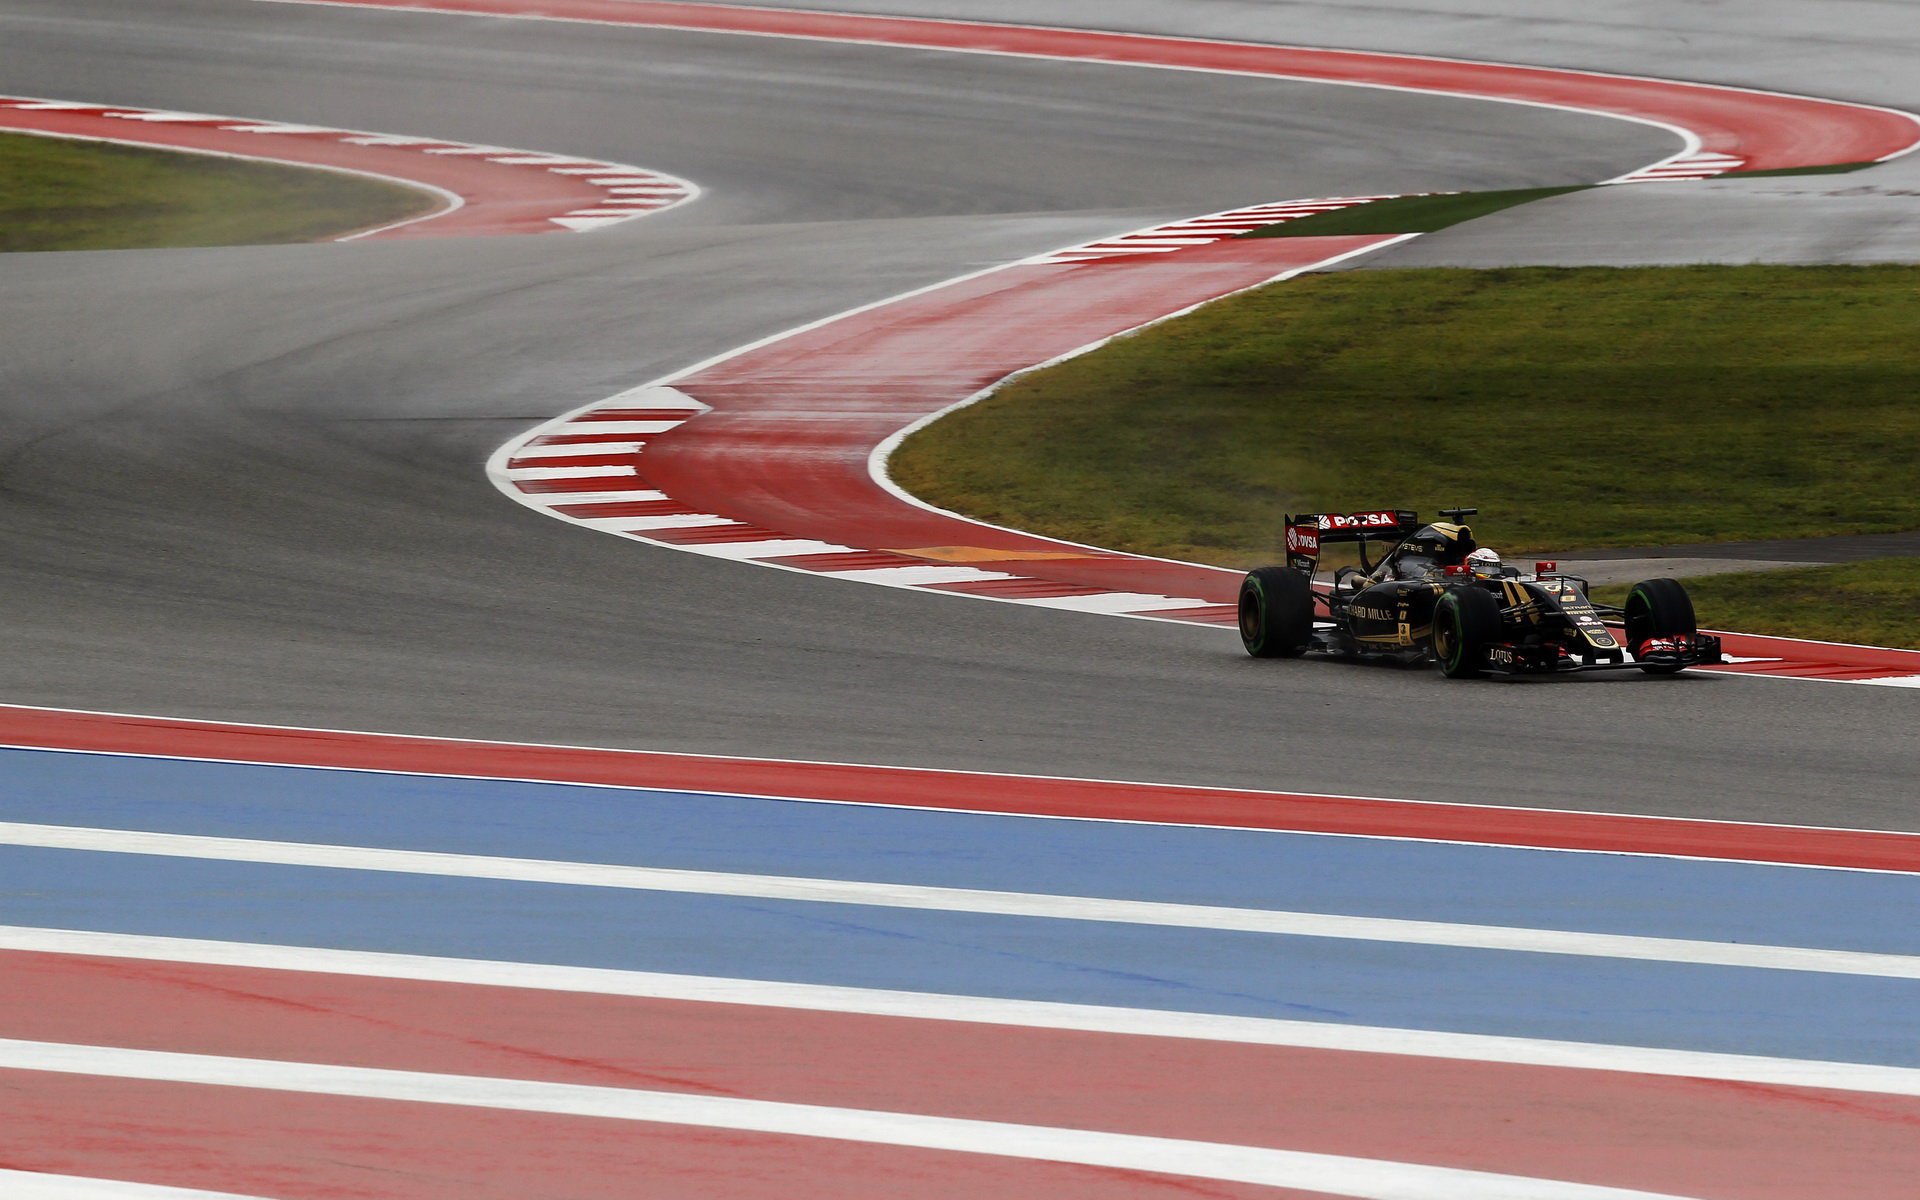 Romain Grosjean v Austinu